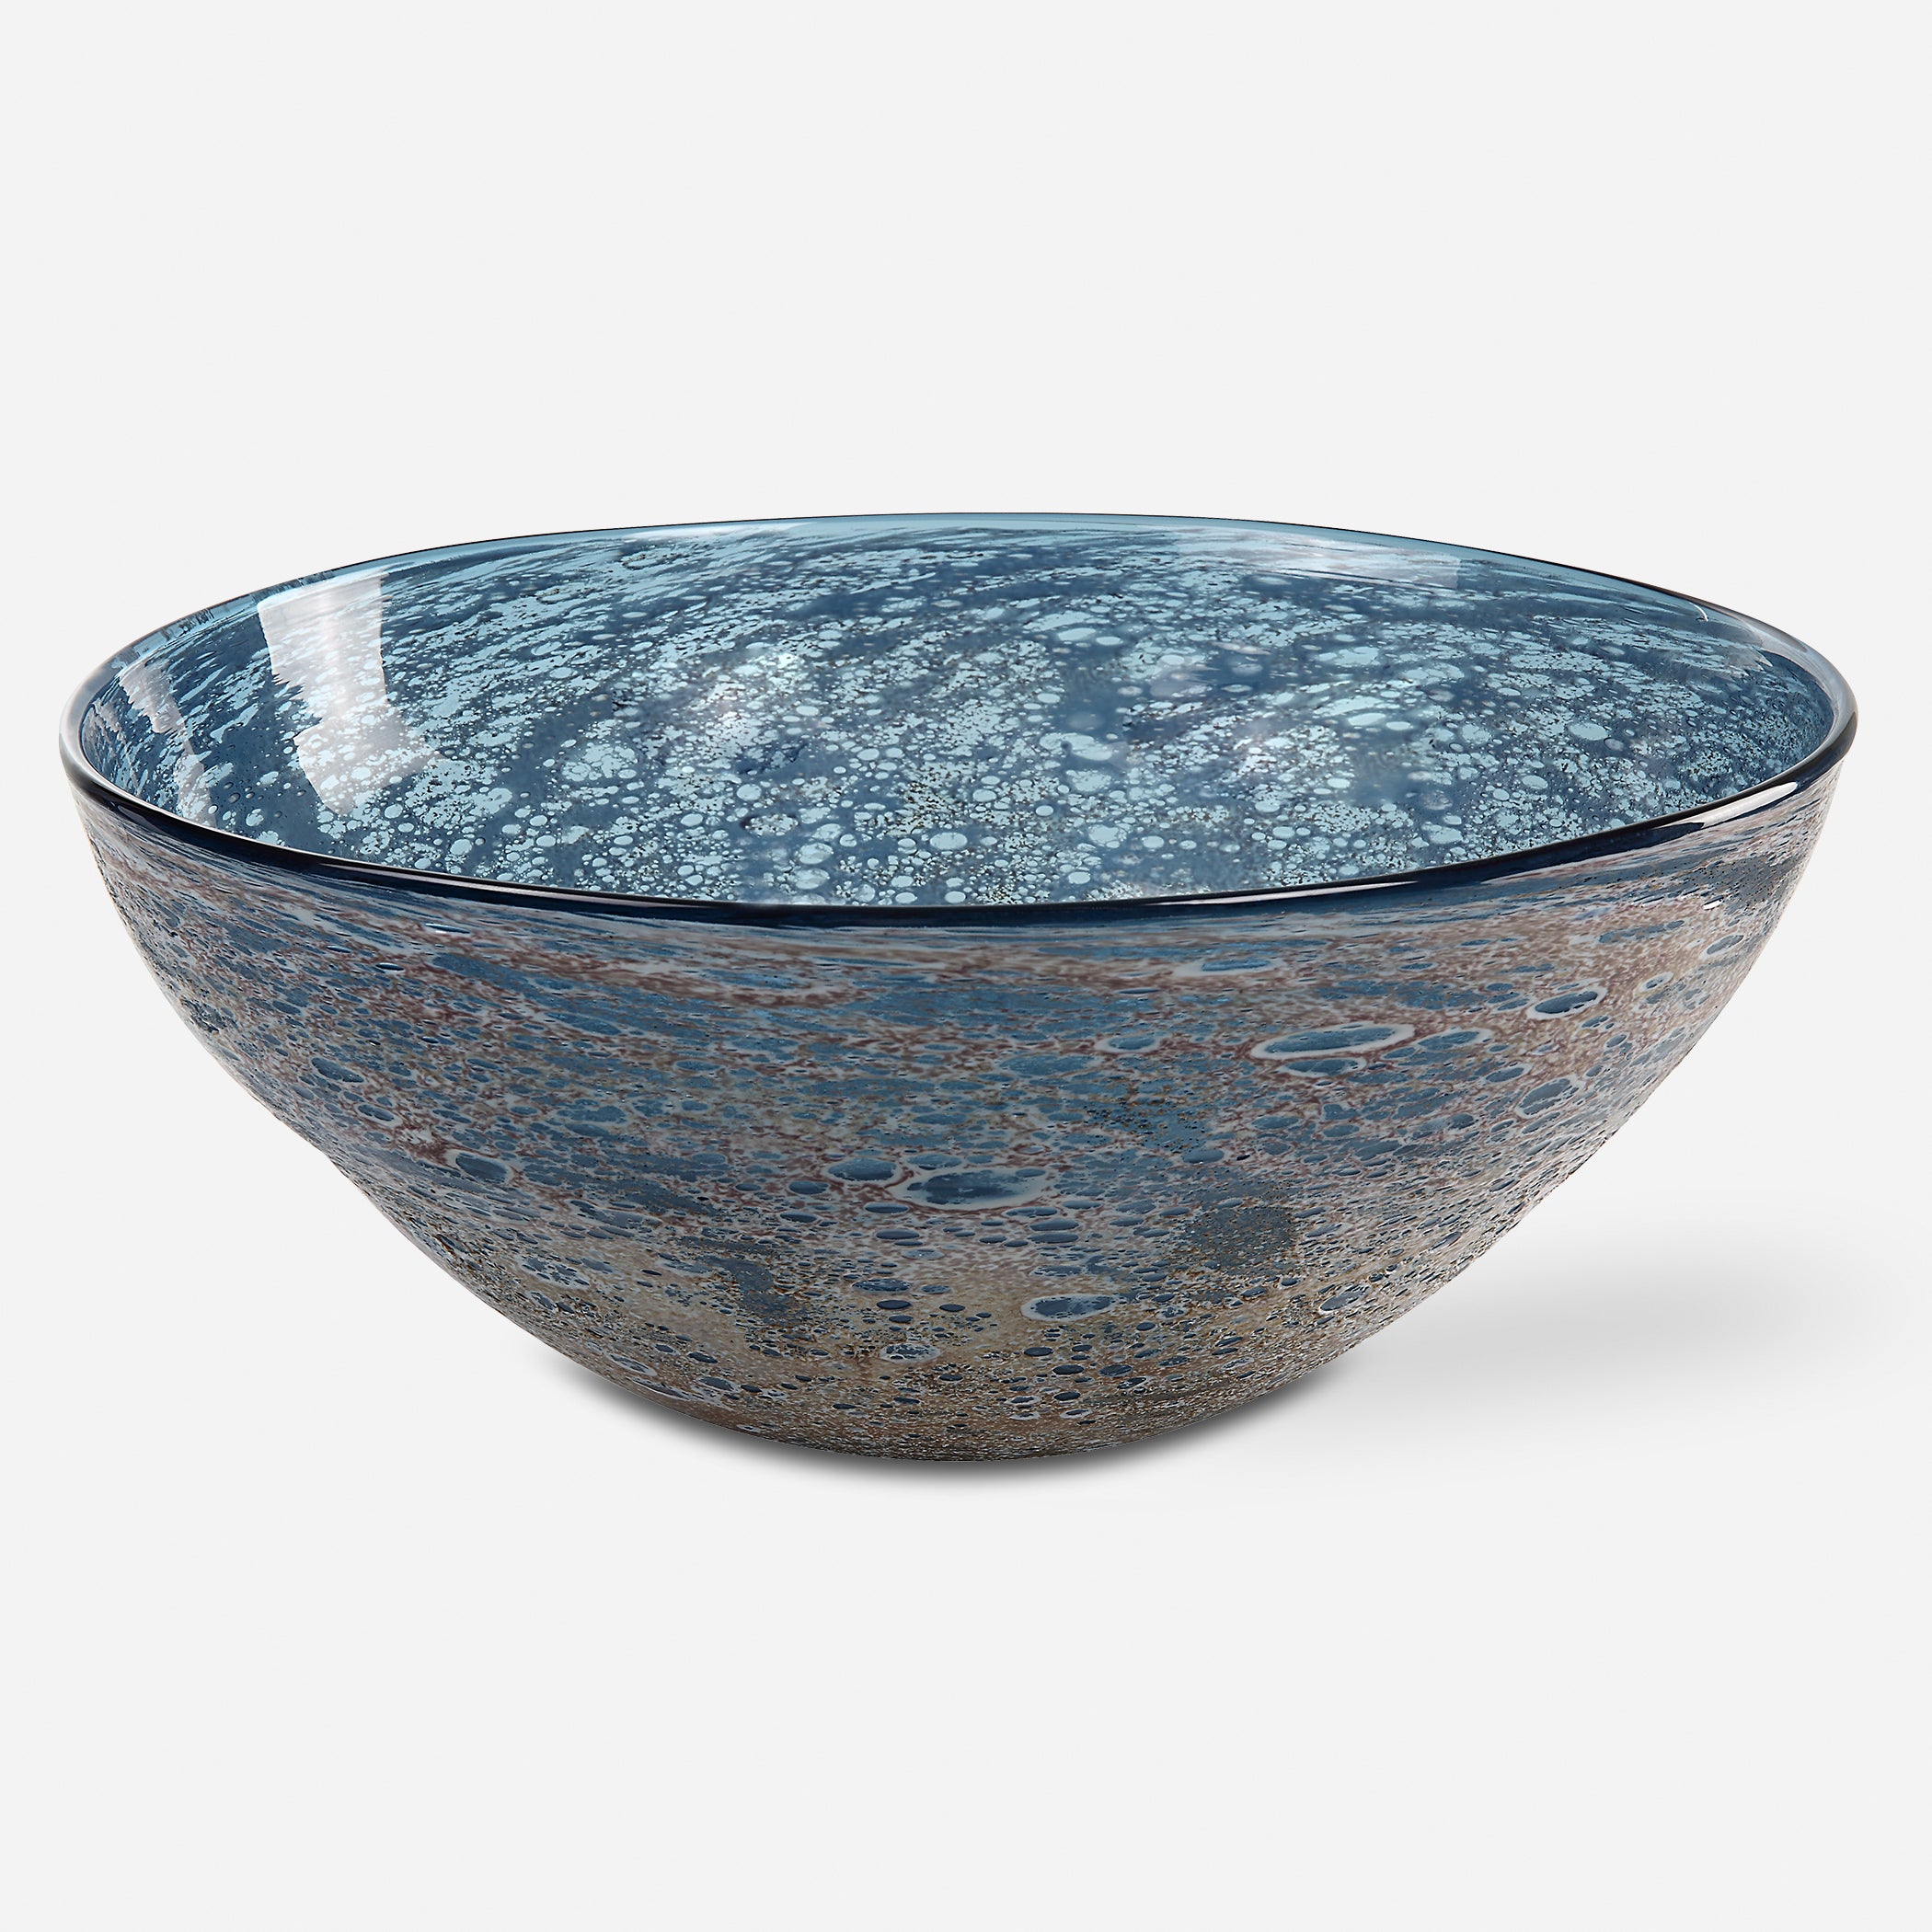 Uttermost Genovesa Decorative Bowls & Trays Decorative Bowls & Trays Uttermost   